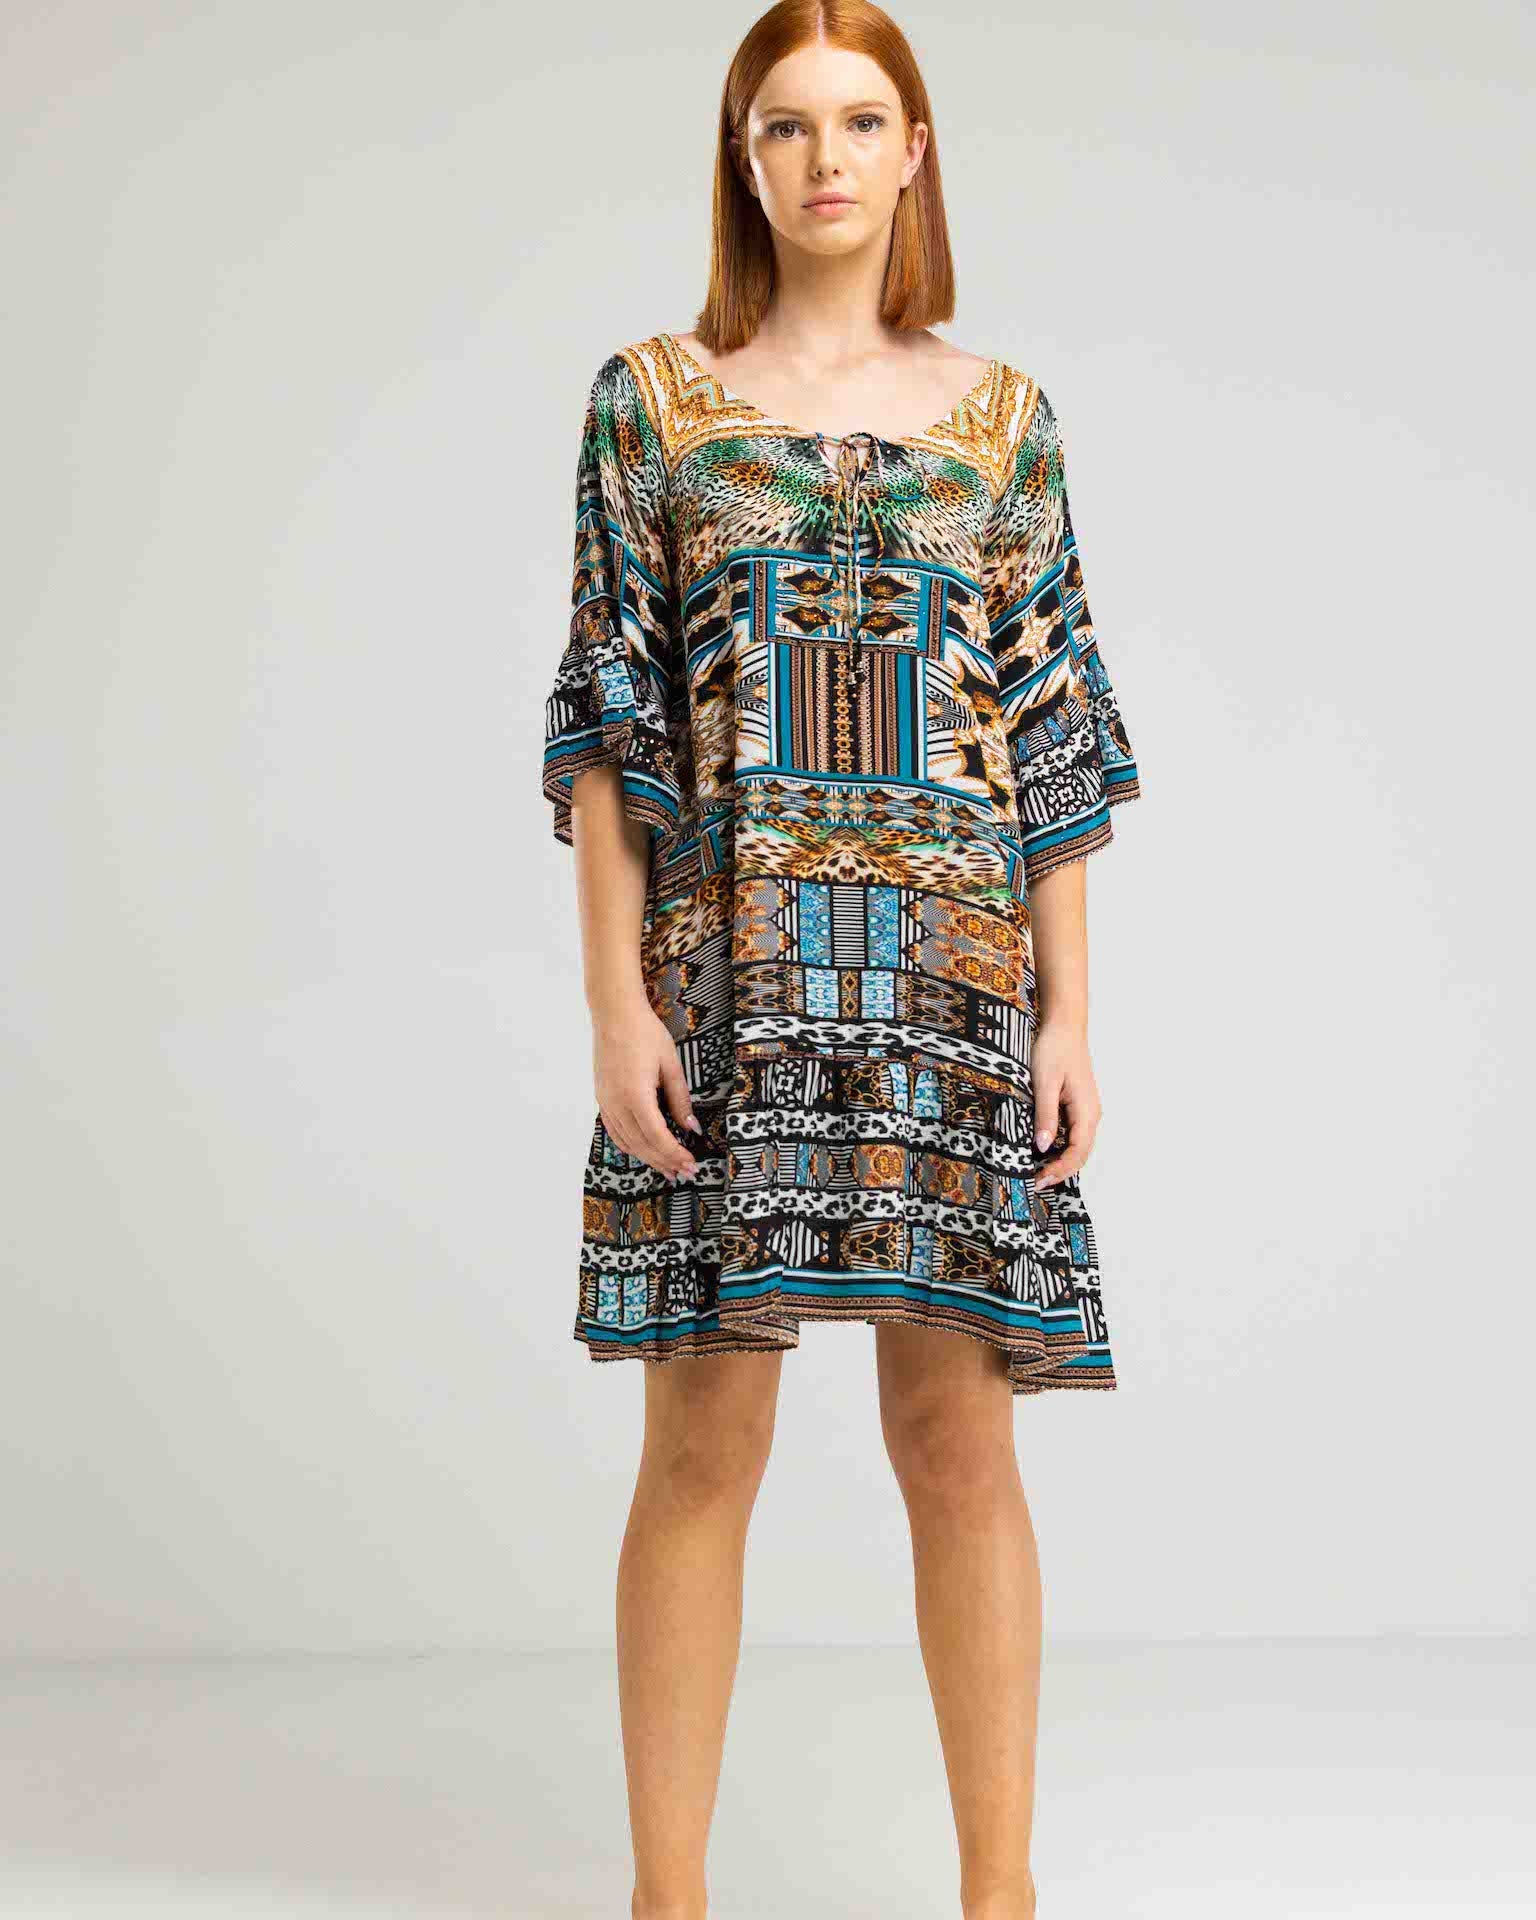 INOA Gypsy Dress - Samsara